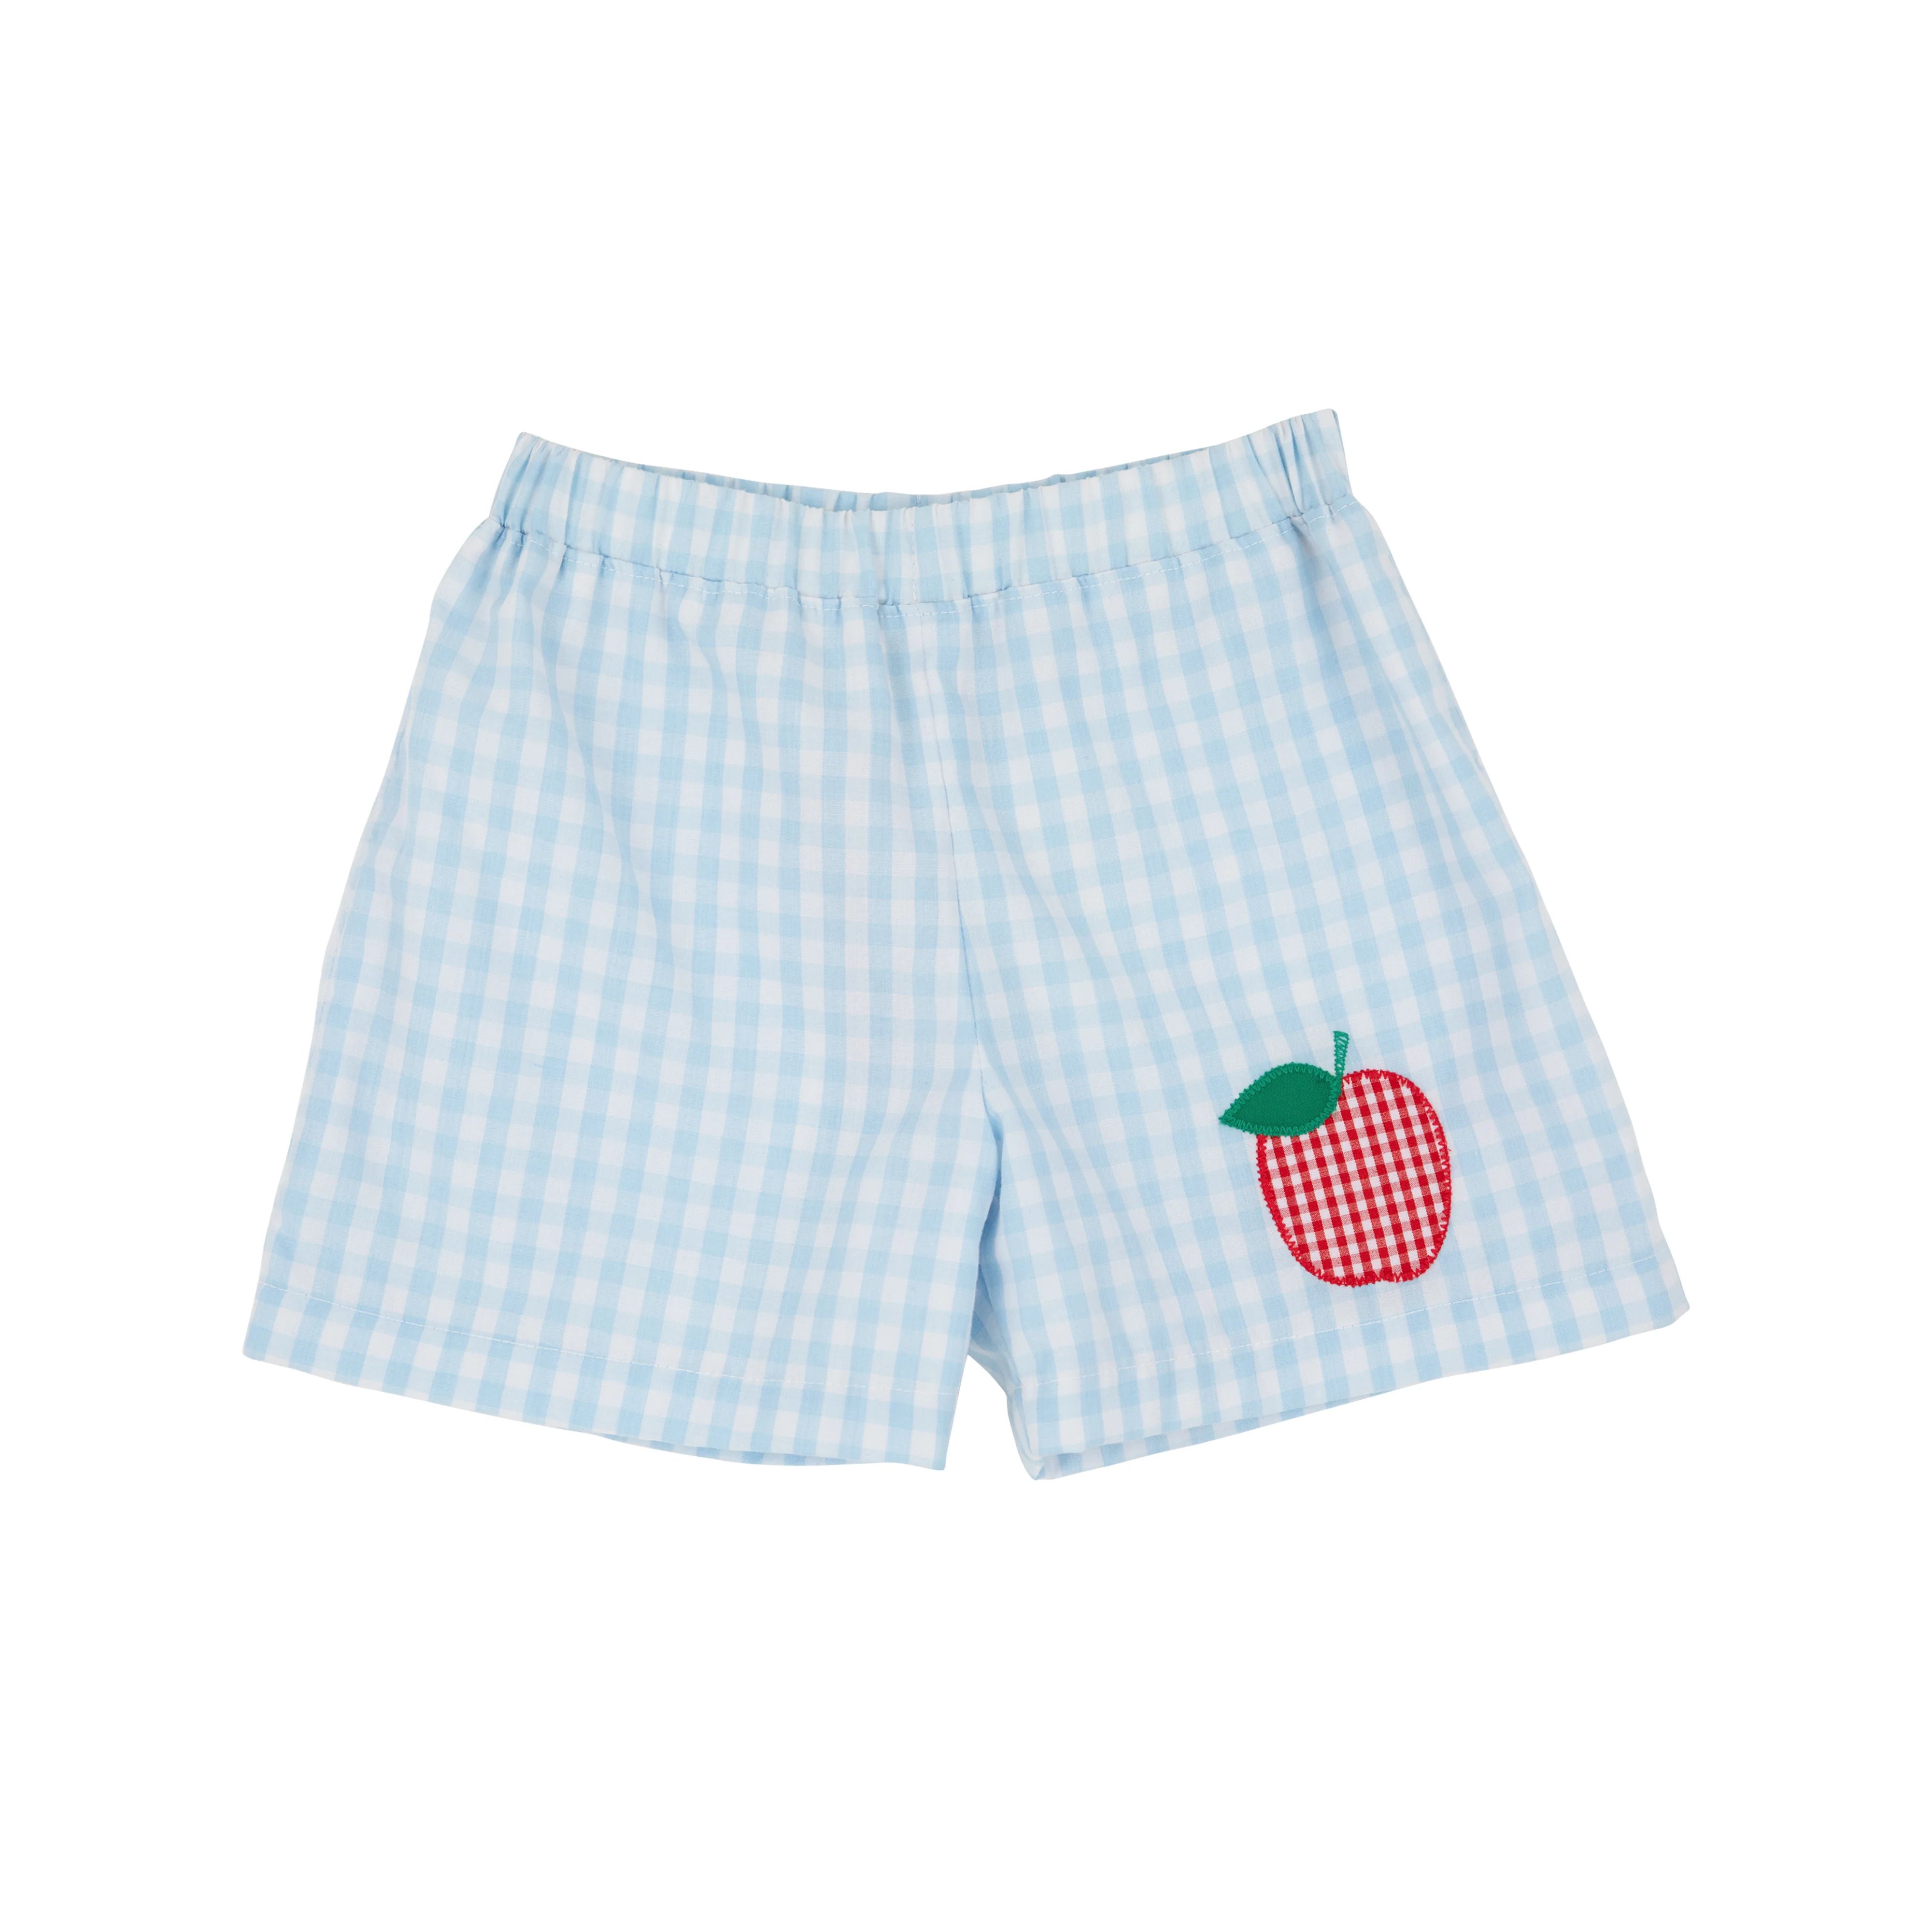 Shelton Shorts - Buckhead Blue Gingham with Apple Applique | The Beaufort Bonnet Company